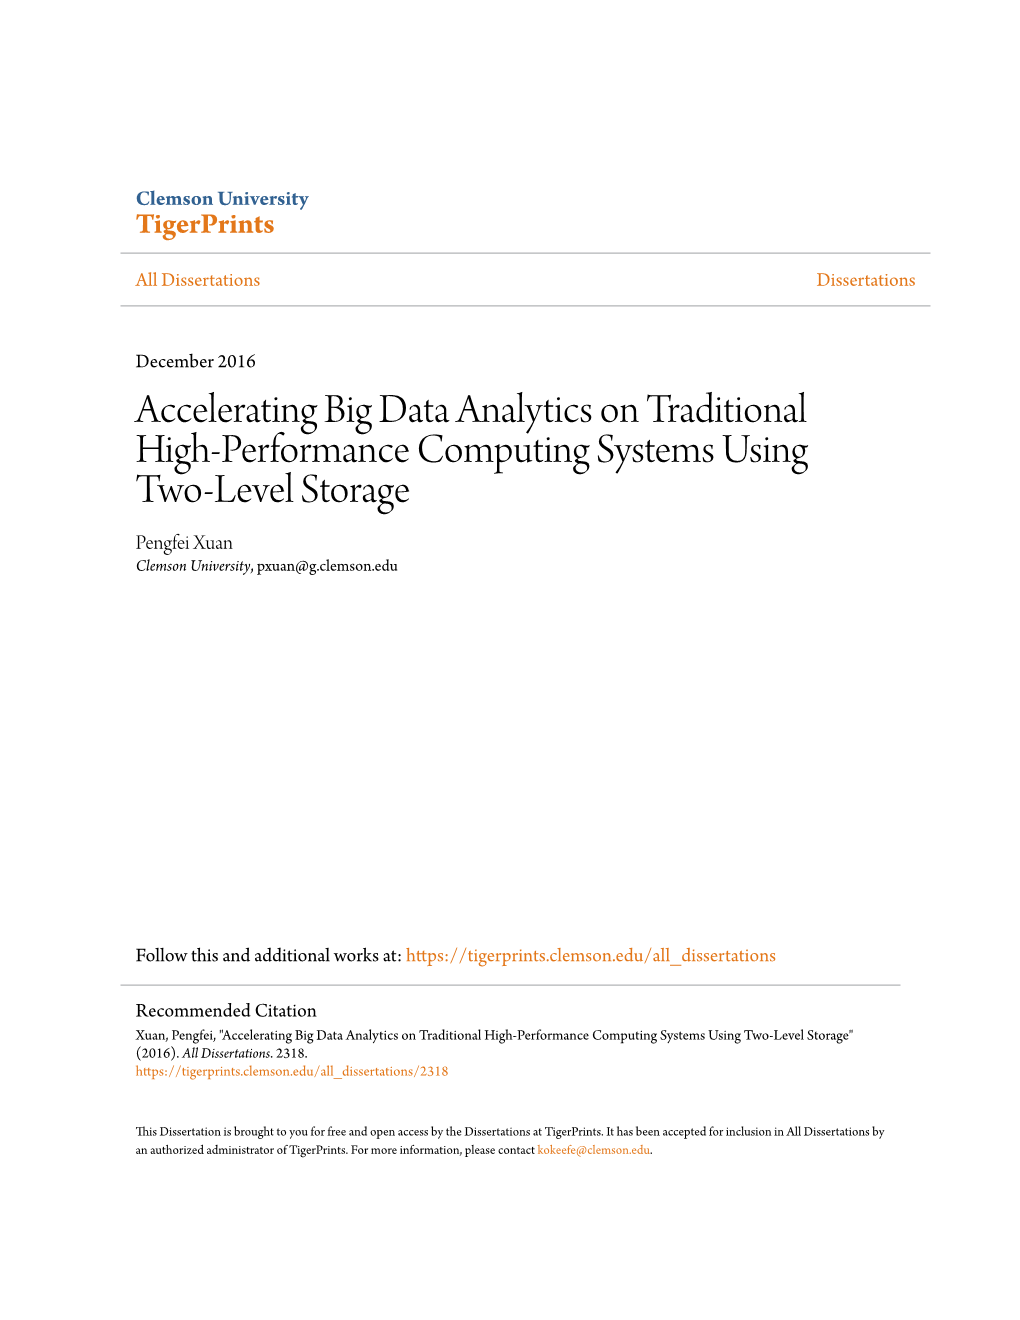 Accelerating Big Data Analytics on Traditional High-Performance Computing Systems Using Two-Level Storage Pengfei Xuan Clemson University, Pxuan@G.Clemson.Edu